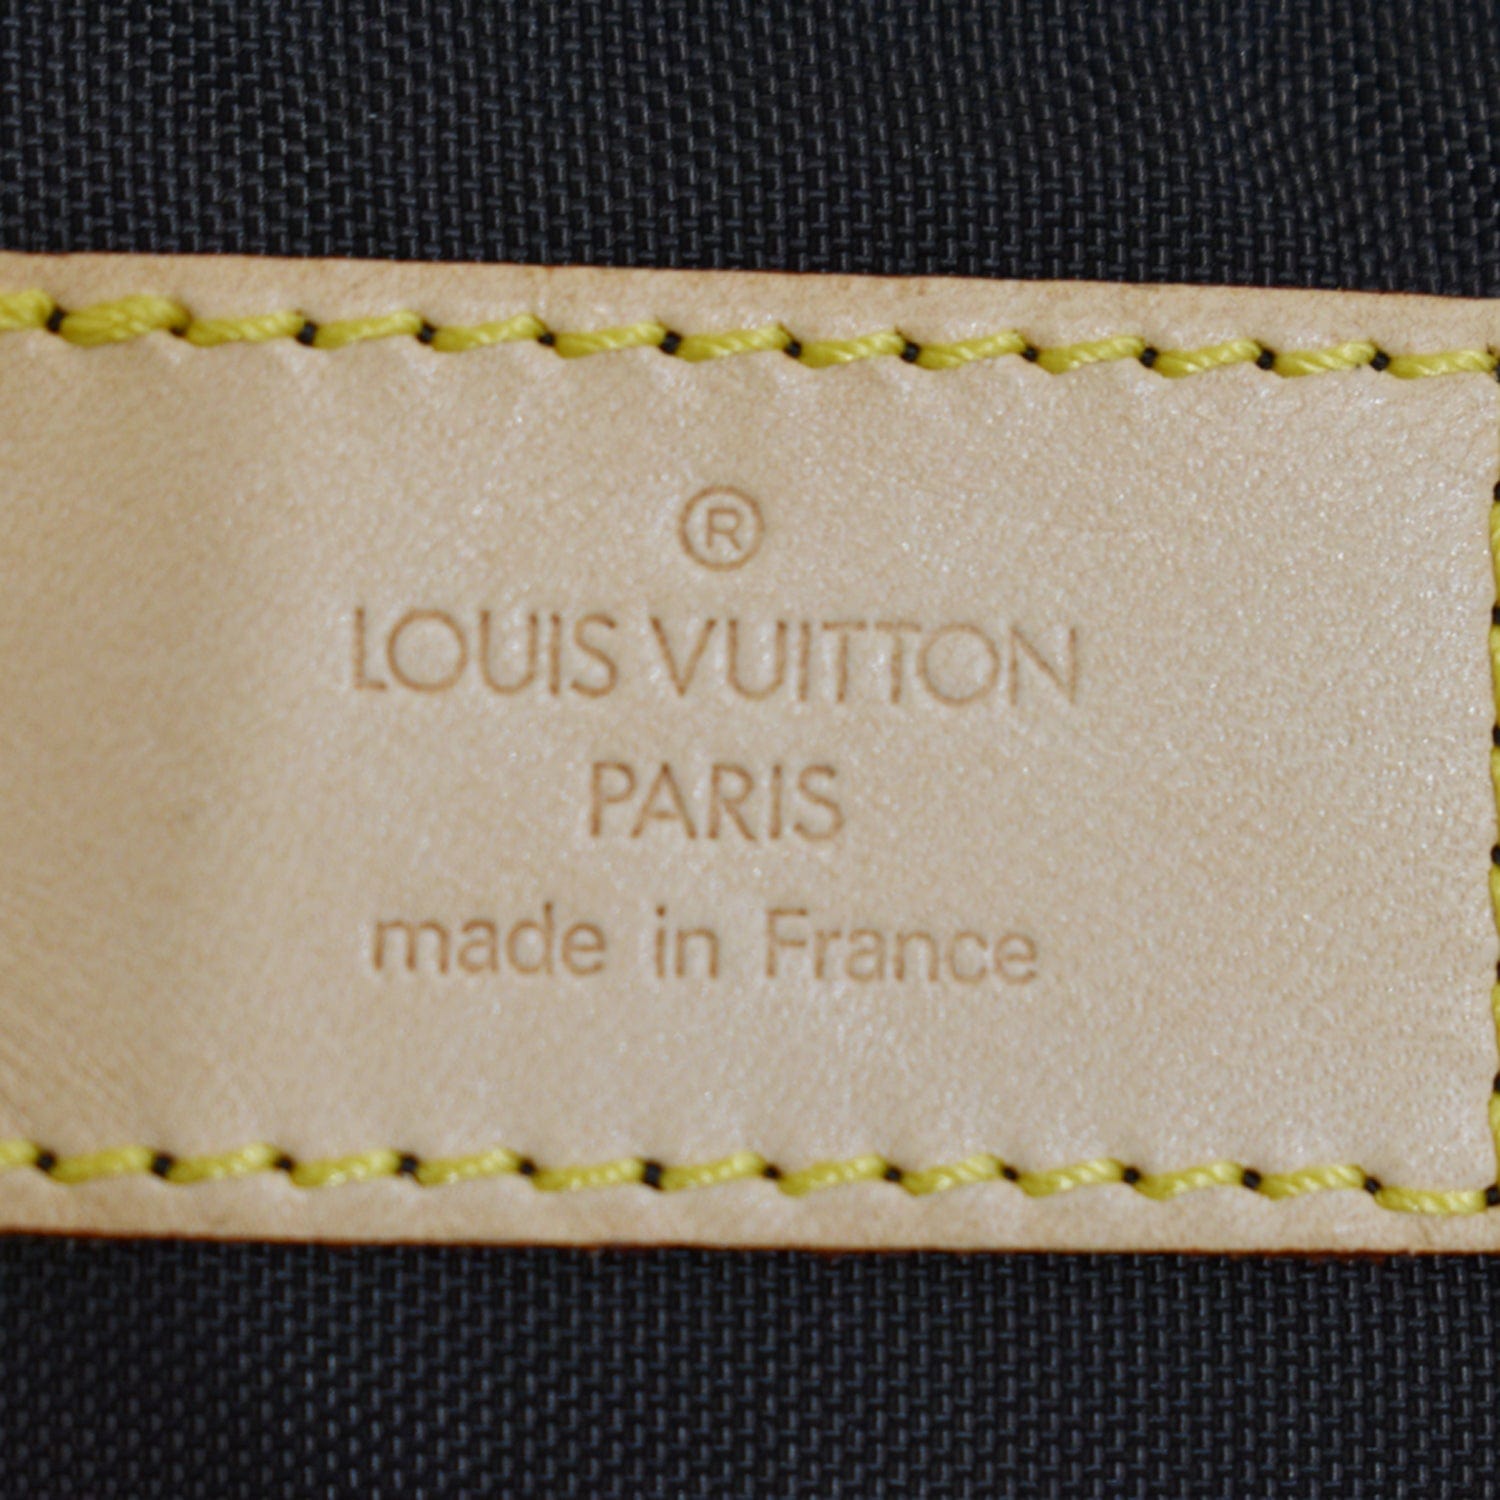 Louis Vuitton Vintage Louis Vuitton Monogram SP0016 Made In France